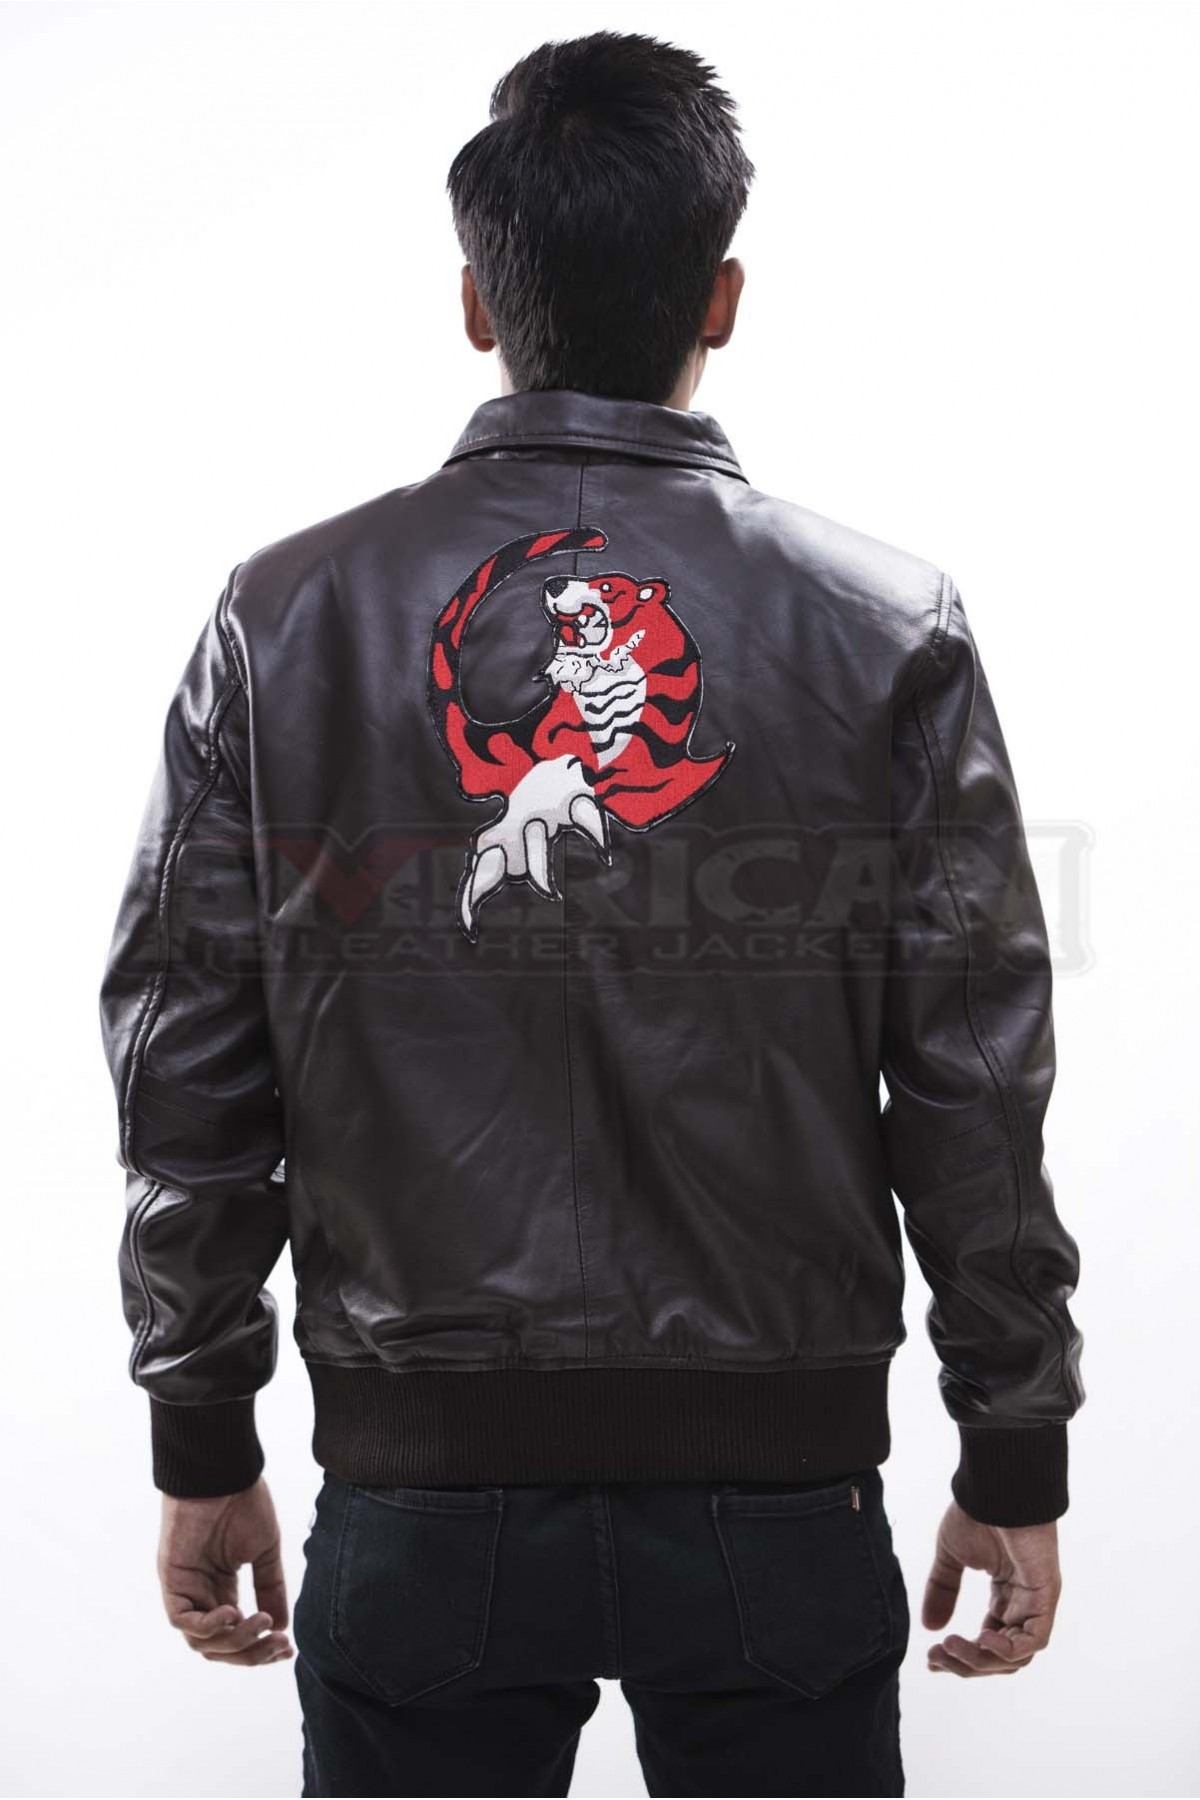 Shenmue Ryo Hazuki Leather Jacket | Video Game Costume